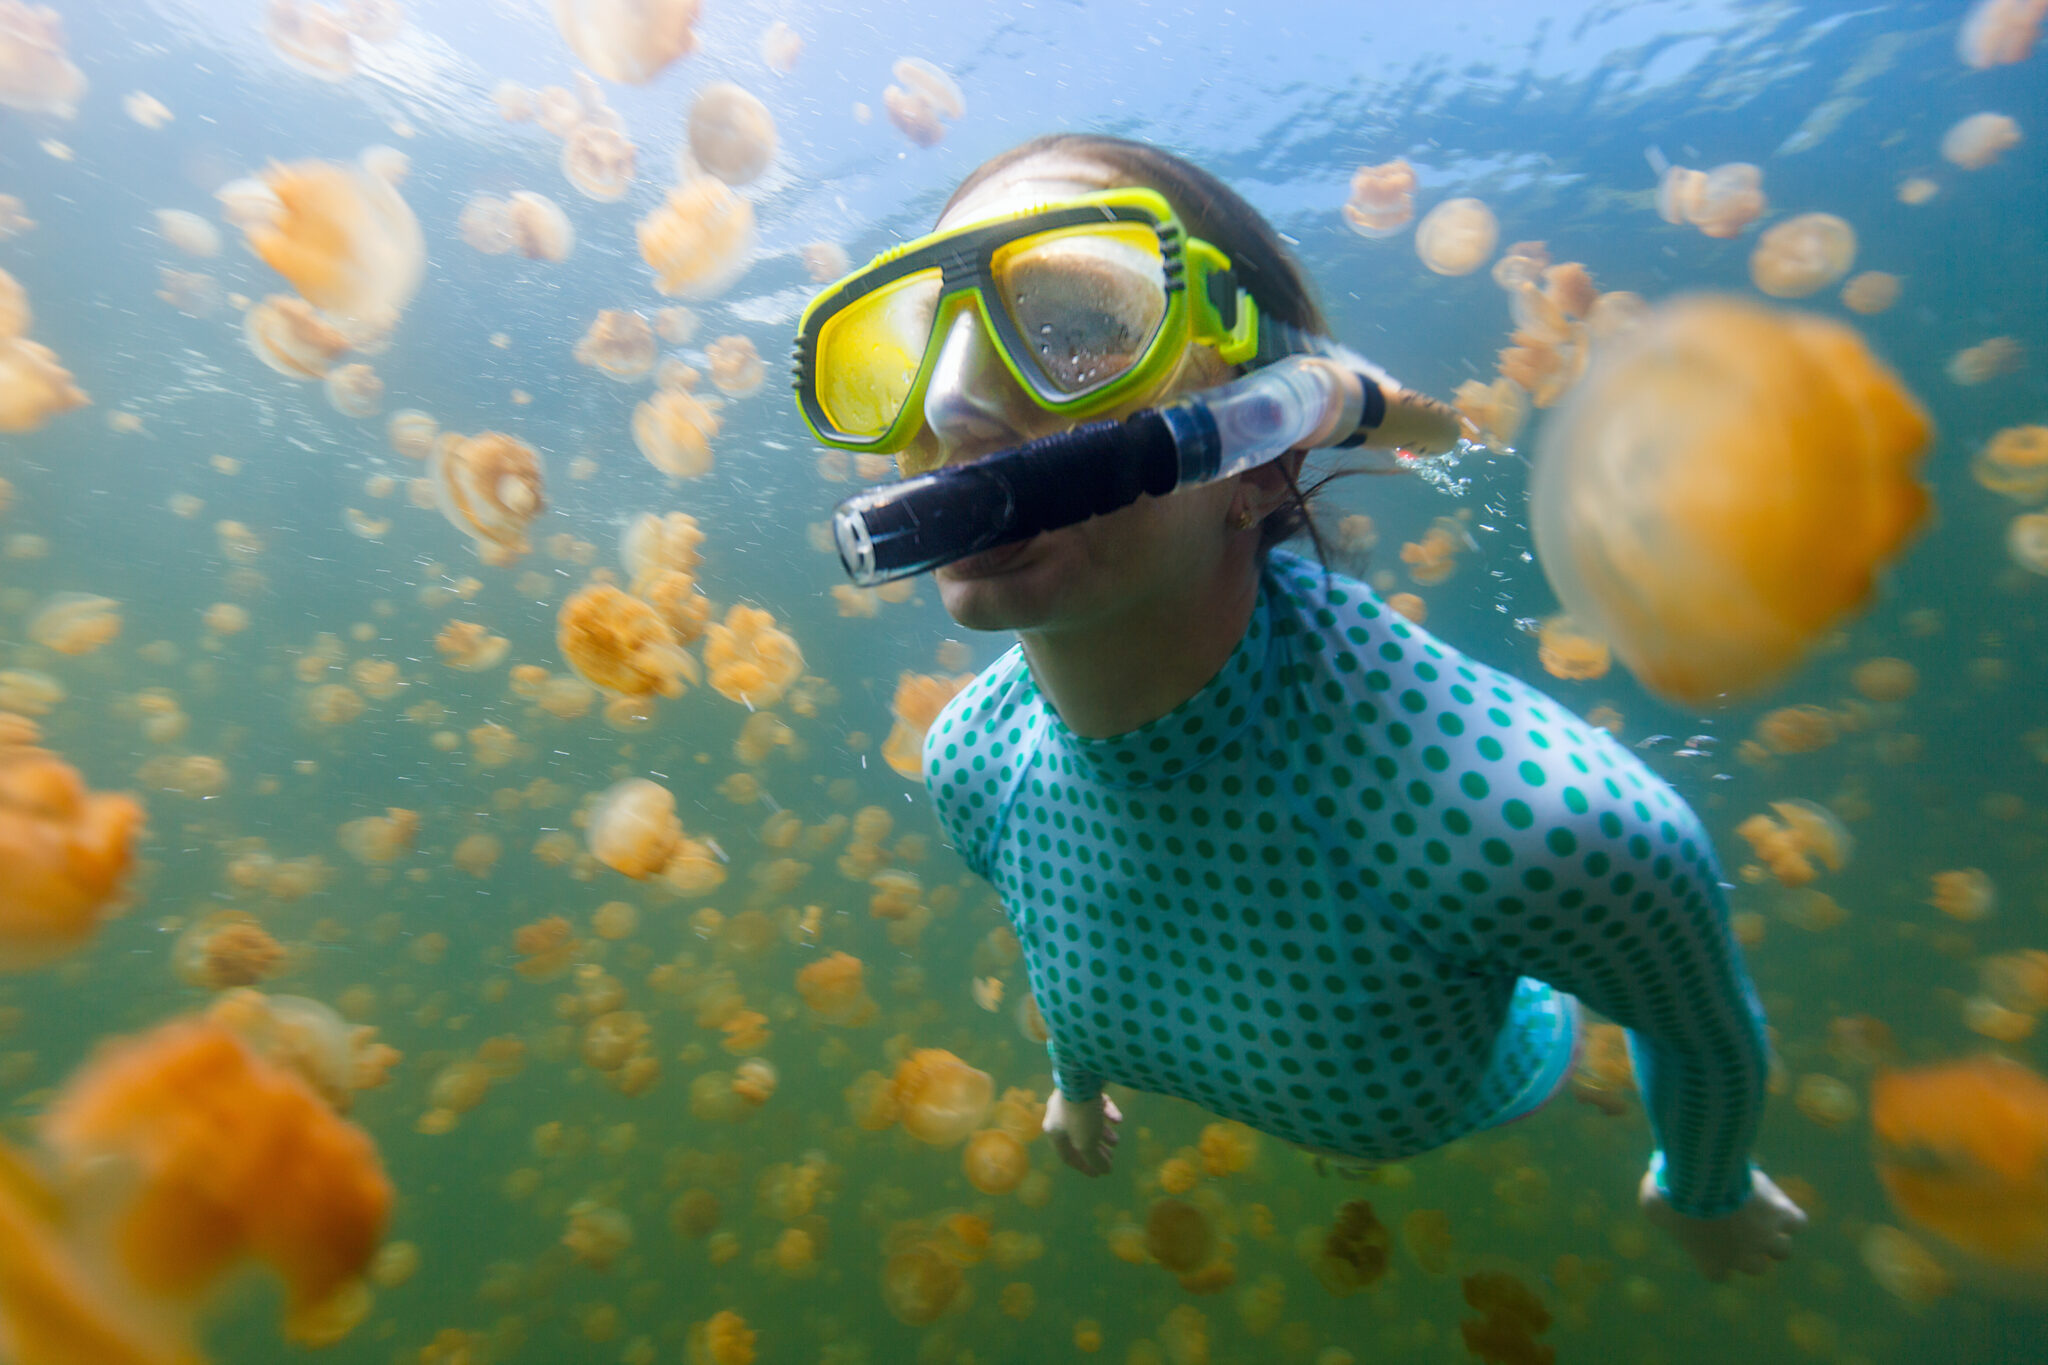 A snorkeler freedives amongst golden jellyfish